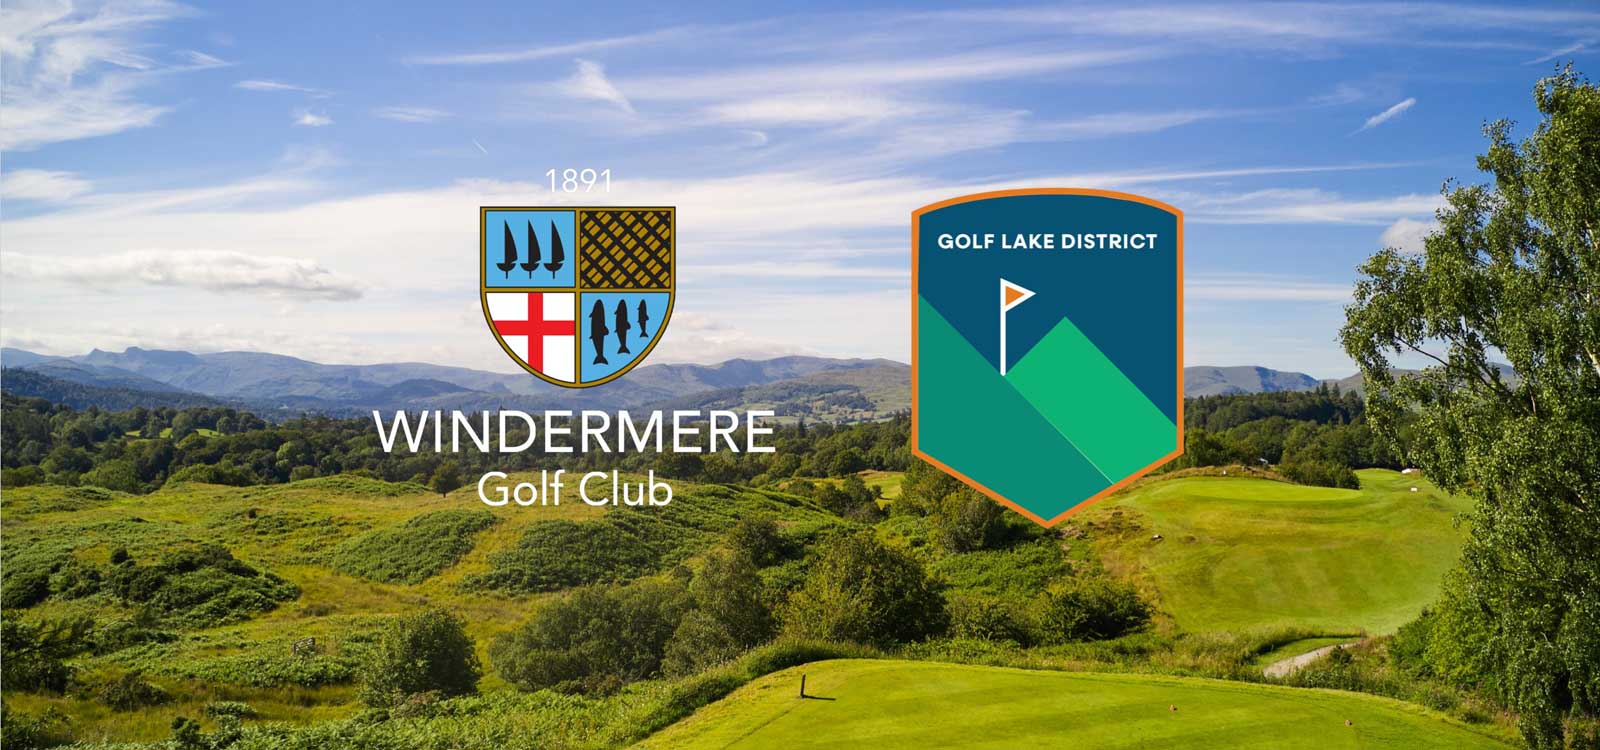 Windermere Package - Golf Lake District